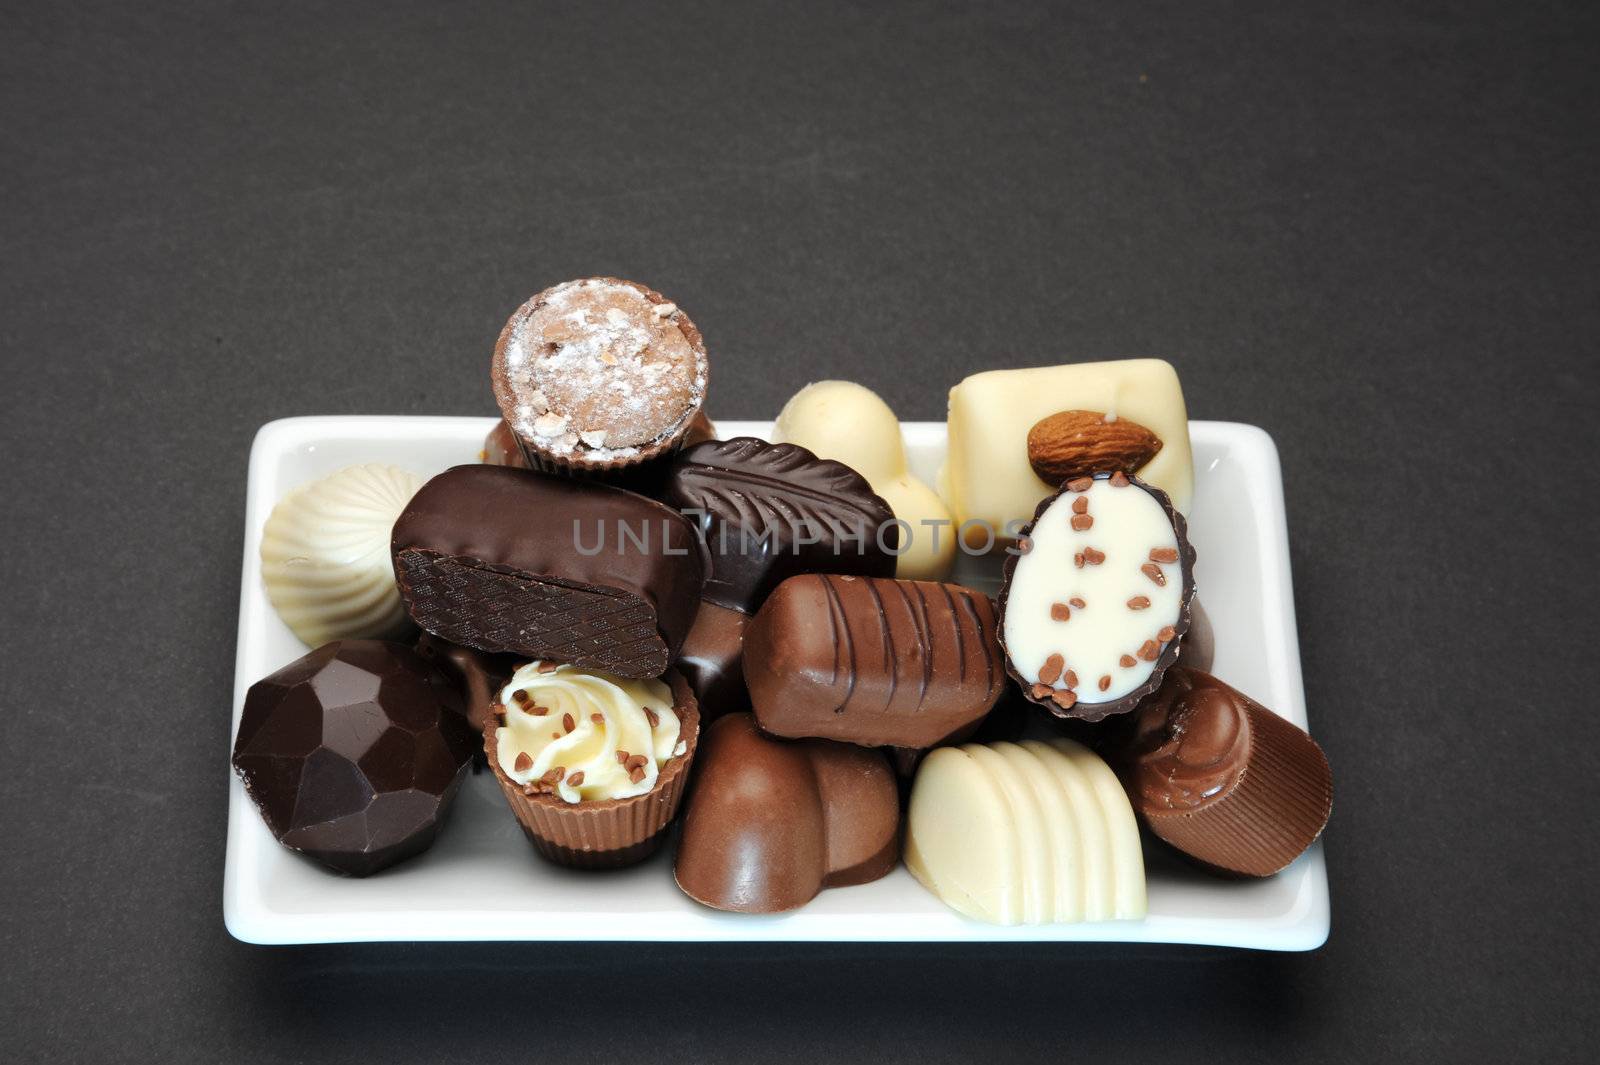 Chocolates by sjeacle